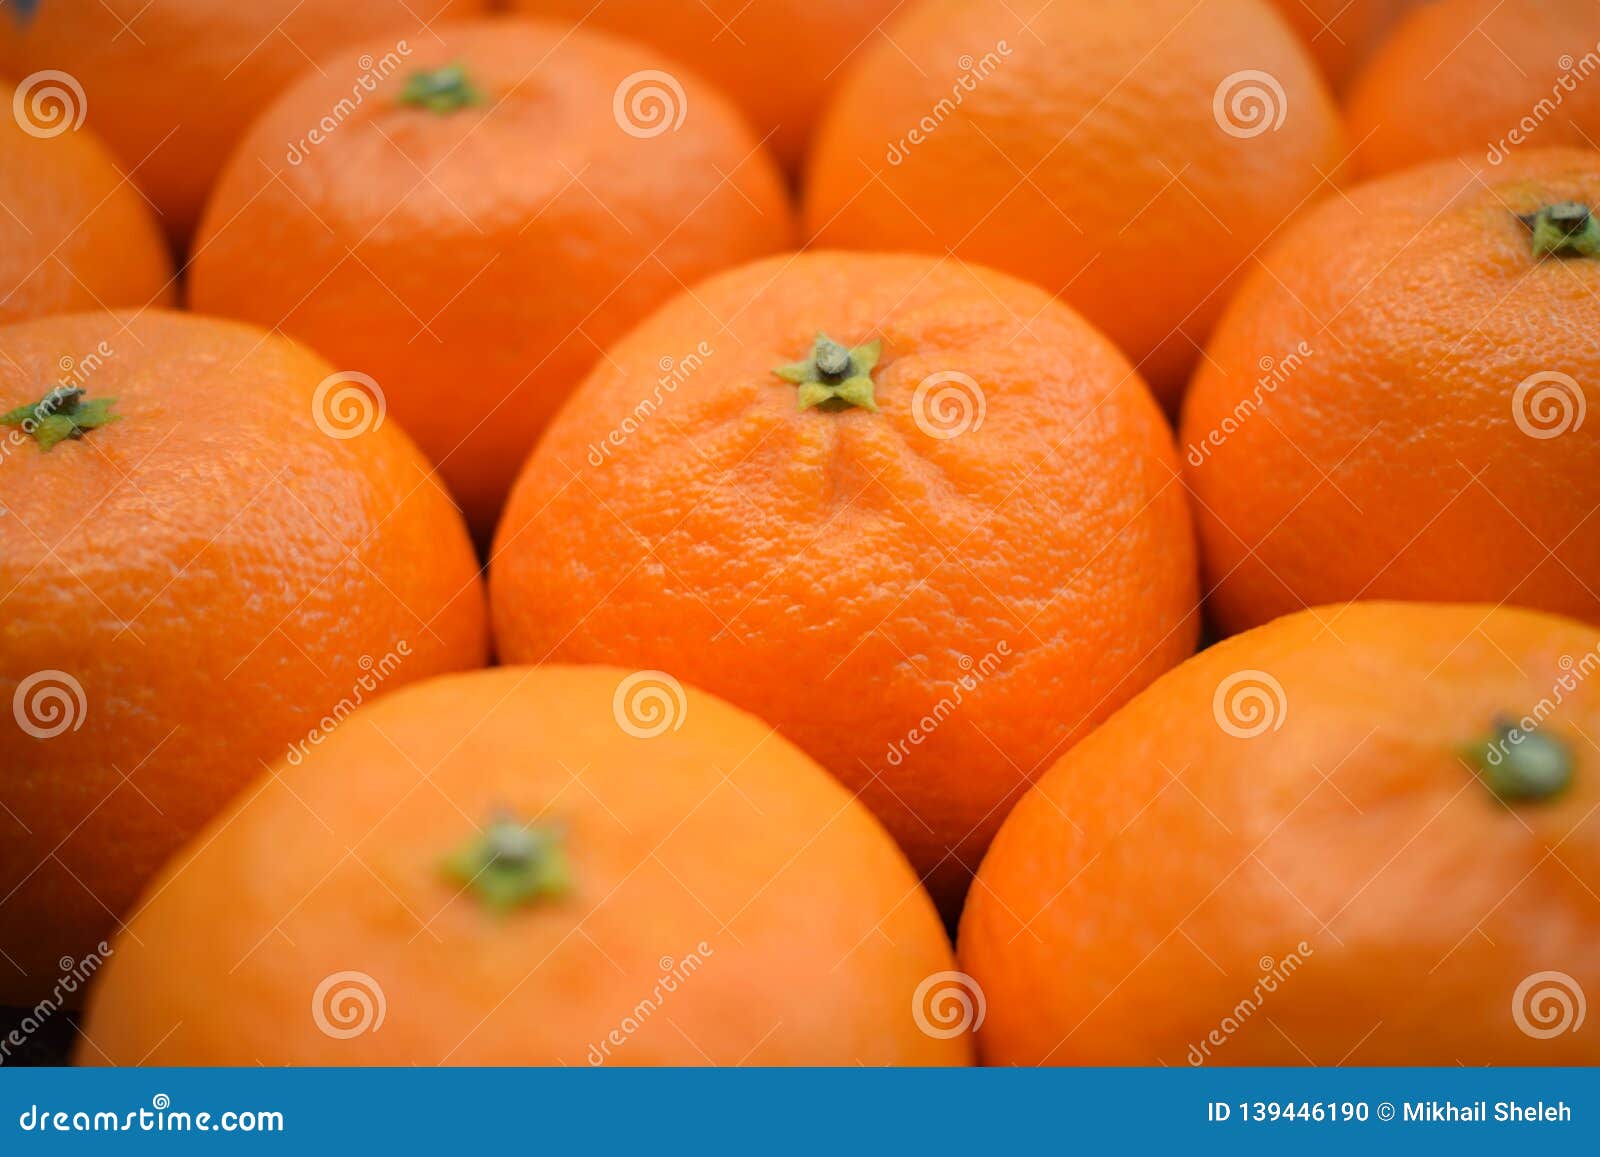 Mood orange mandarin color stock photo. Image of useful